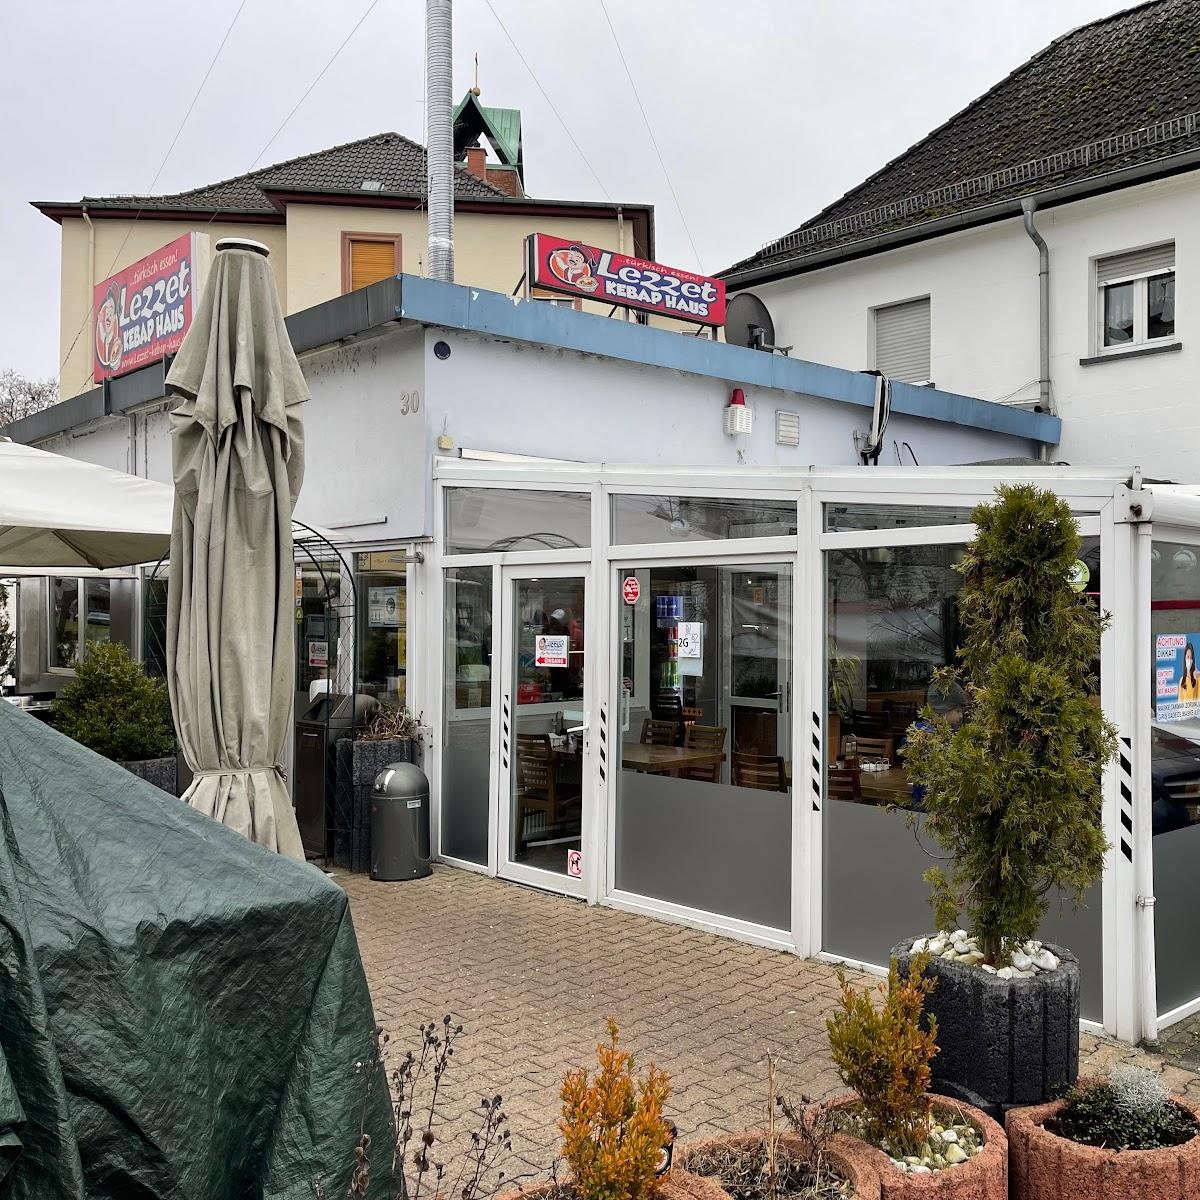 Restaurant "Lezzet Kebap Haus" in Hanau